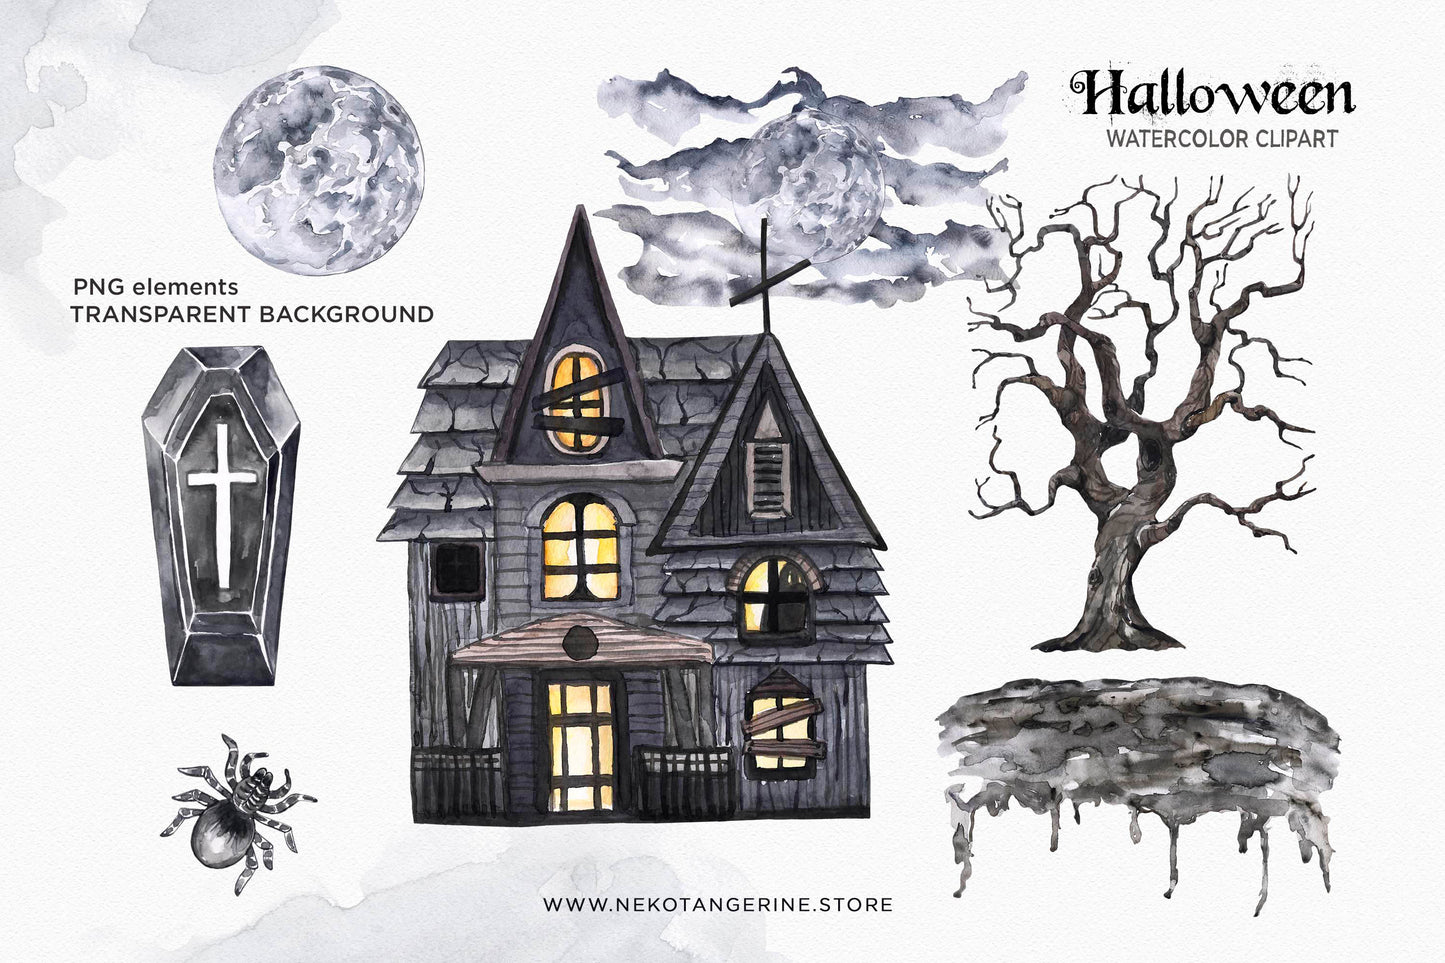 Watercolor Halloween Clipart Vintage Goth Haunted House Ghost Skeleton Skull Bat Jack O Lantern Dad spooky Tree